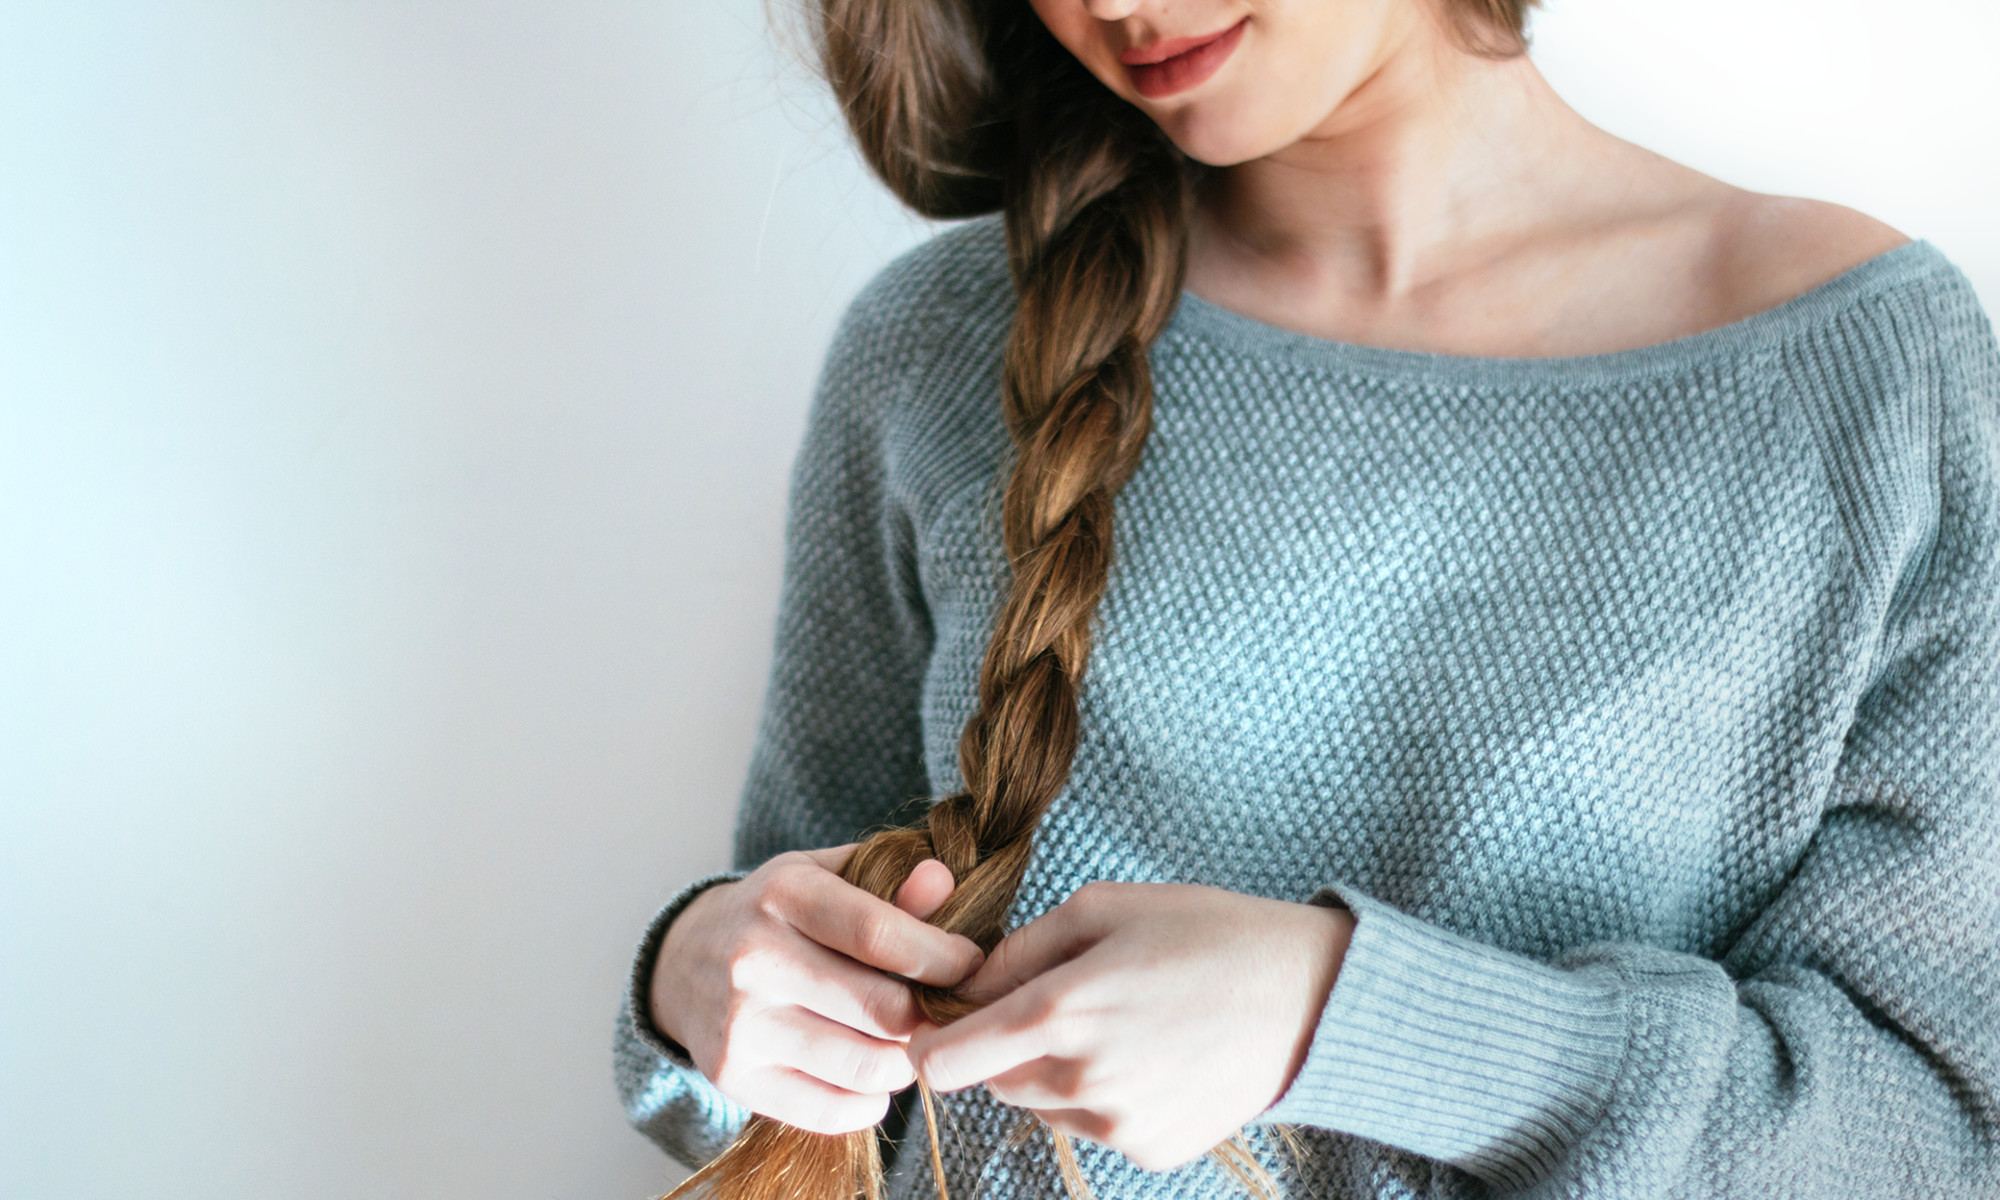 How To Braid Your Own Hair: Tutorials For 8 Types Of Braids | mindbodygreen